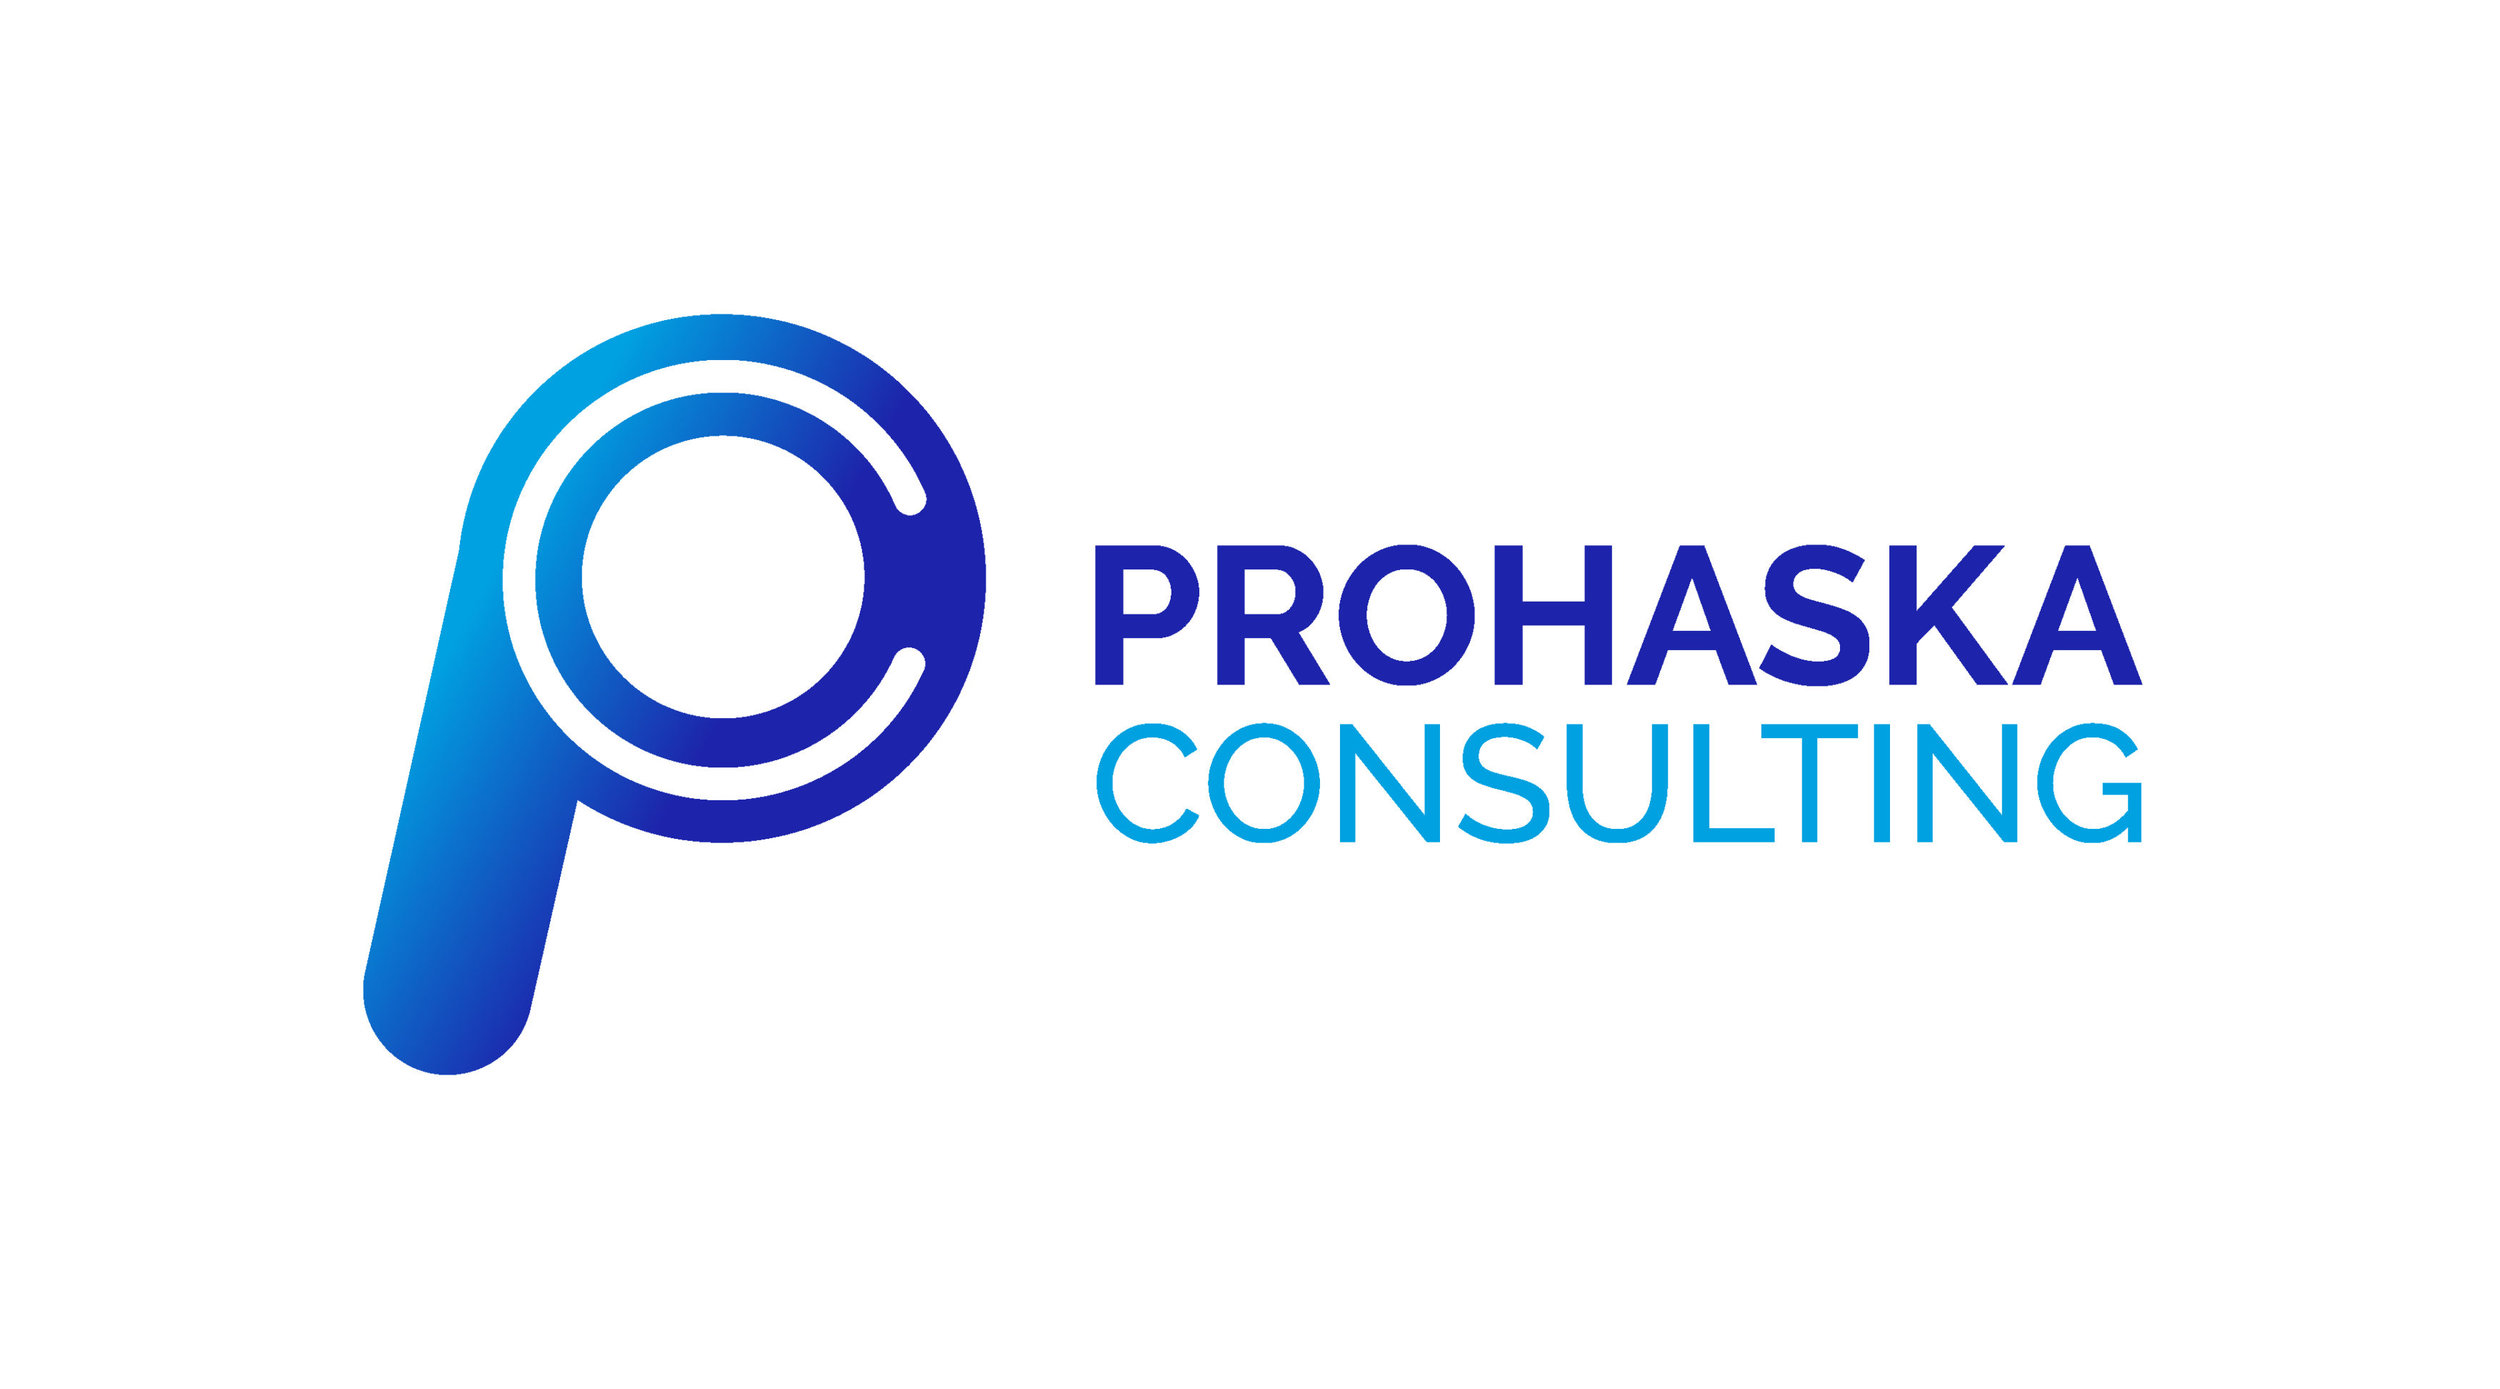 prohaska-consulting-logo-e1486651180164.jpg